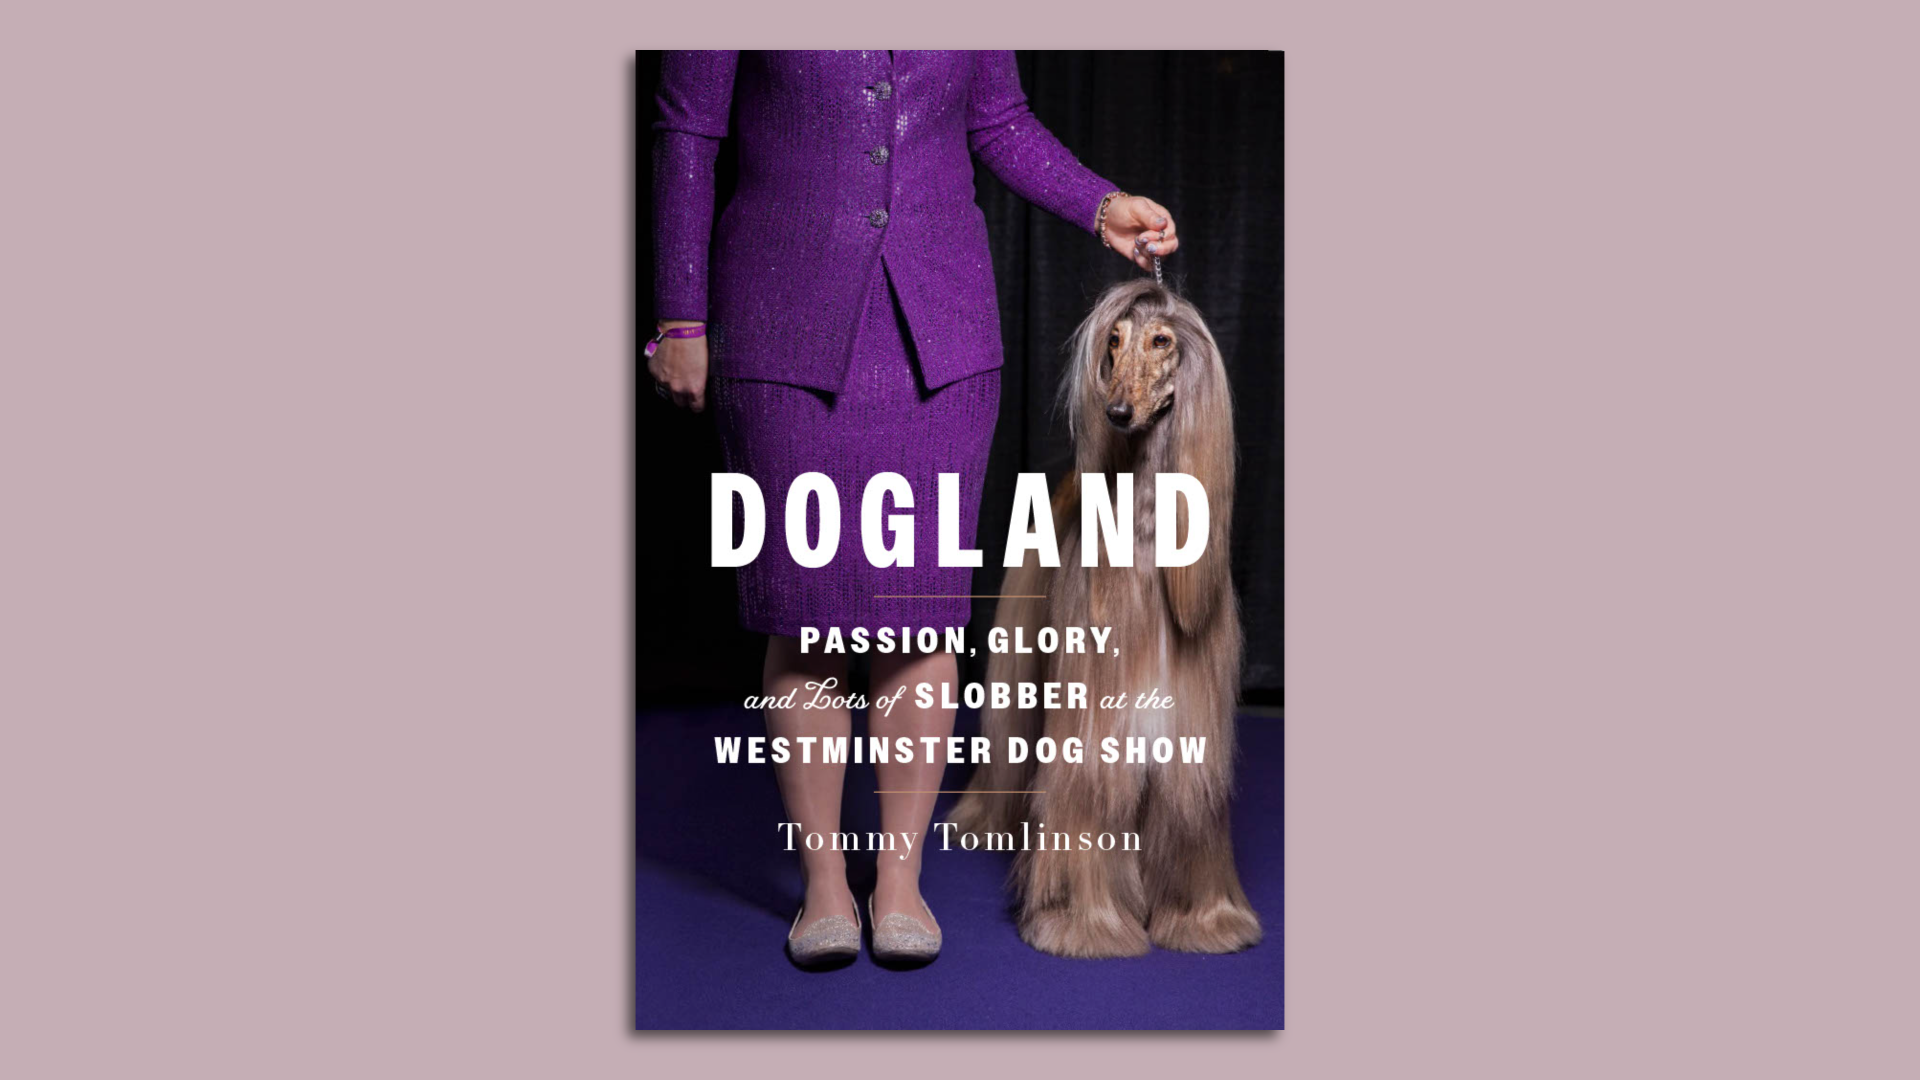 "Dogland" book cover